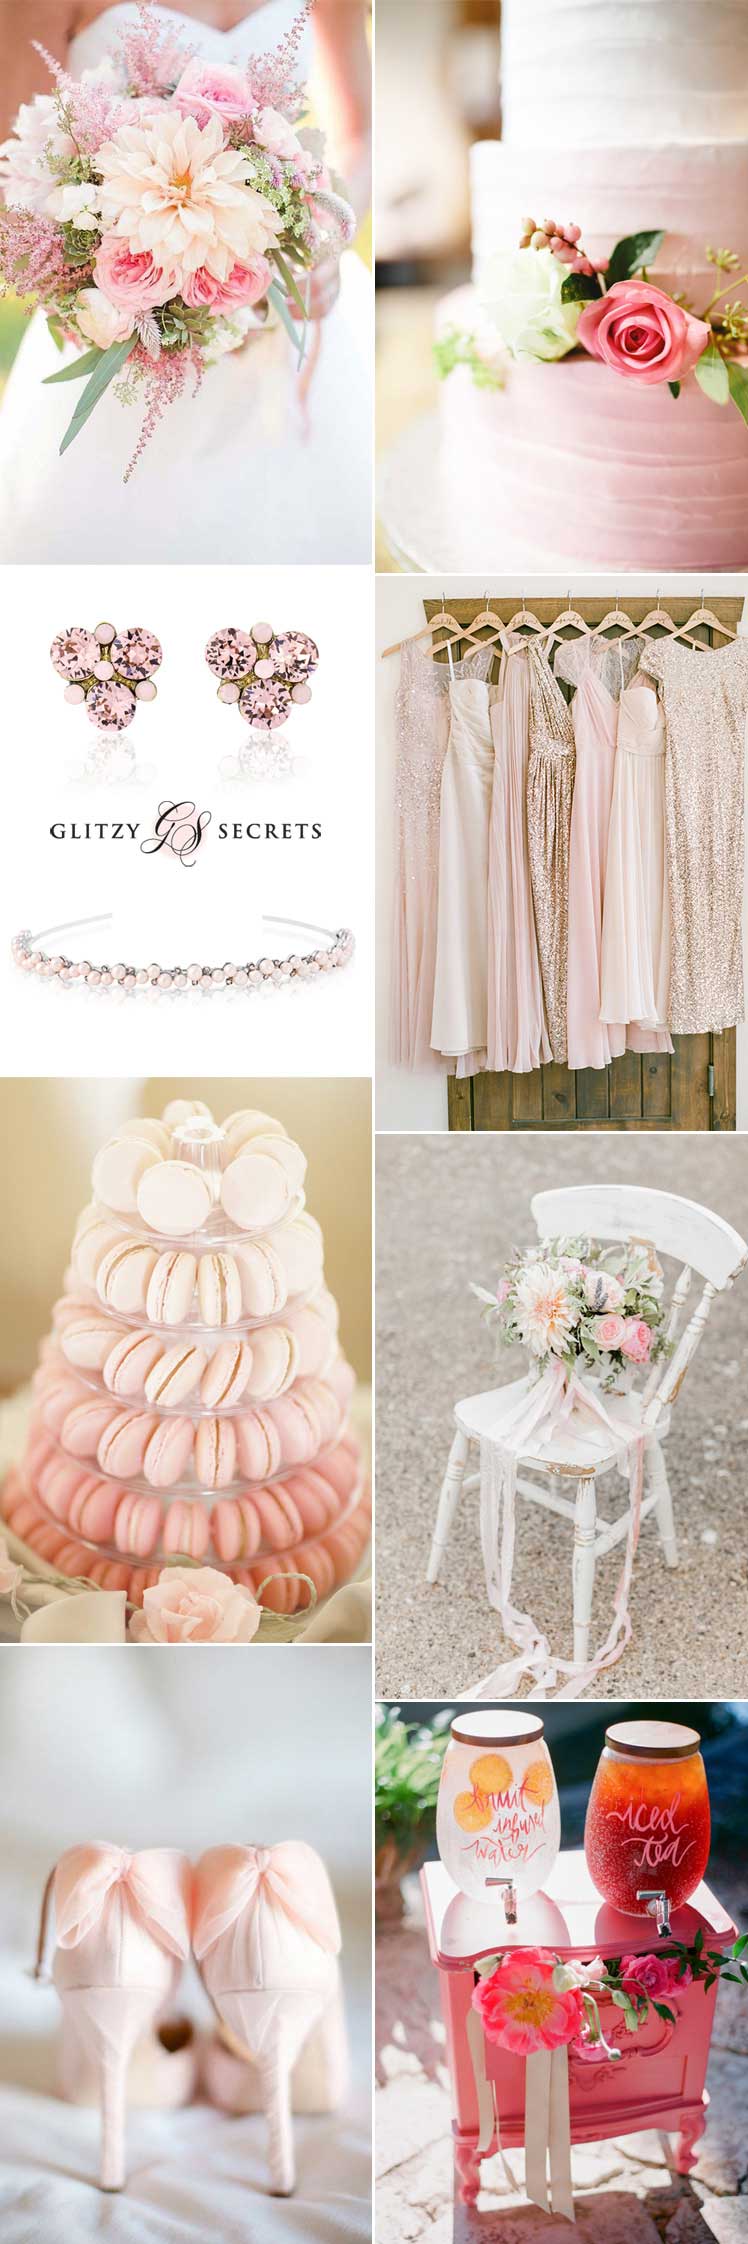 Perfect romantic pink wedding ideas inspiration